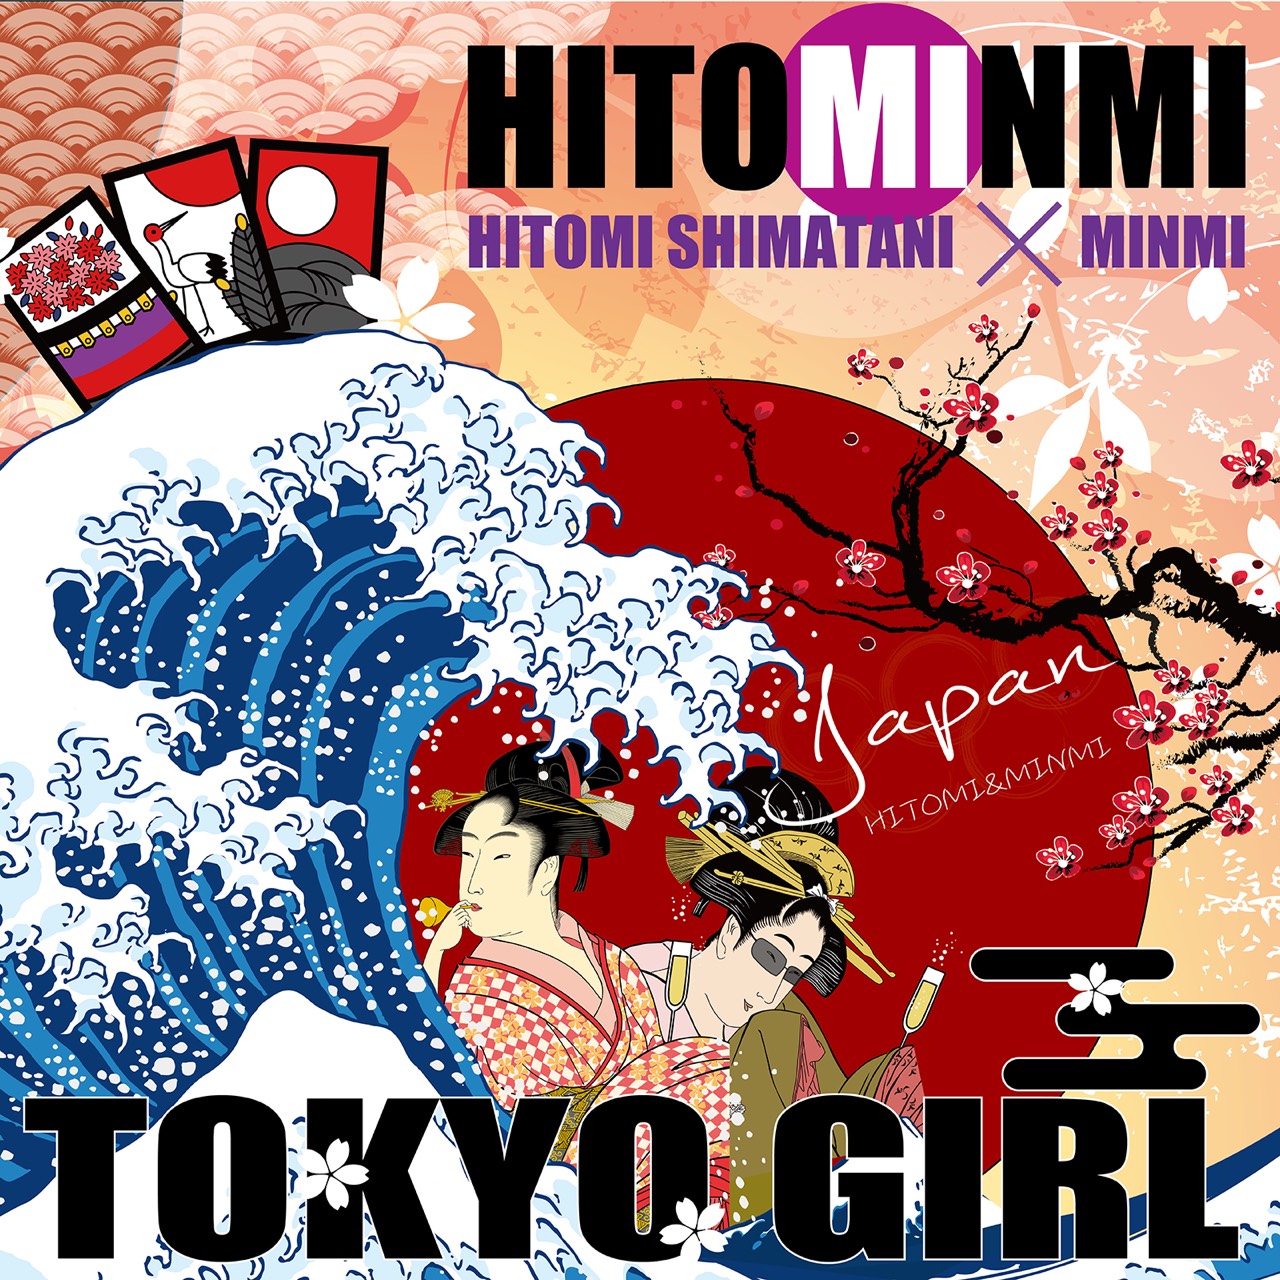 Tokyo Girl MINMI SHIMATANI HITOMINMI